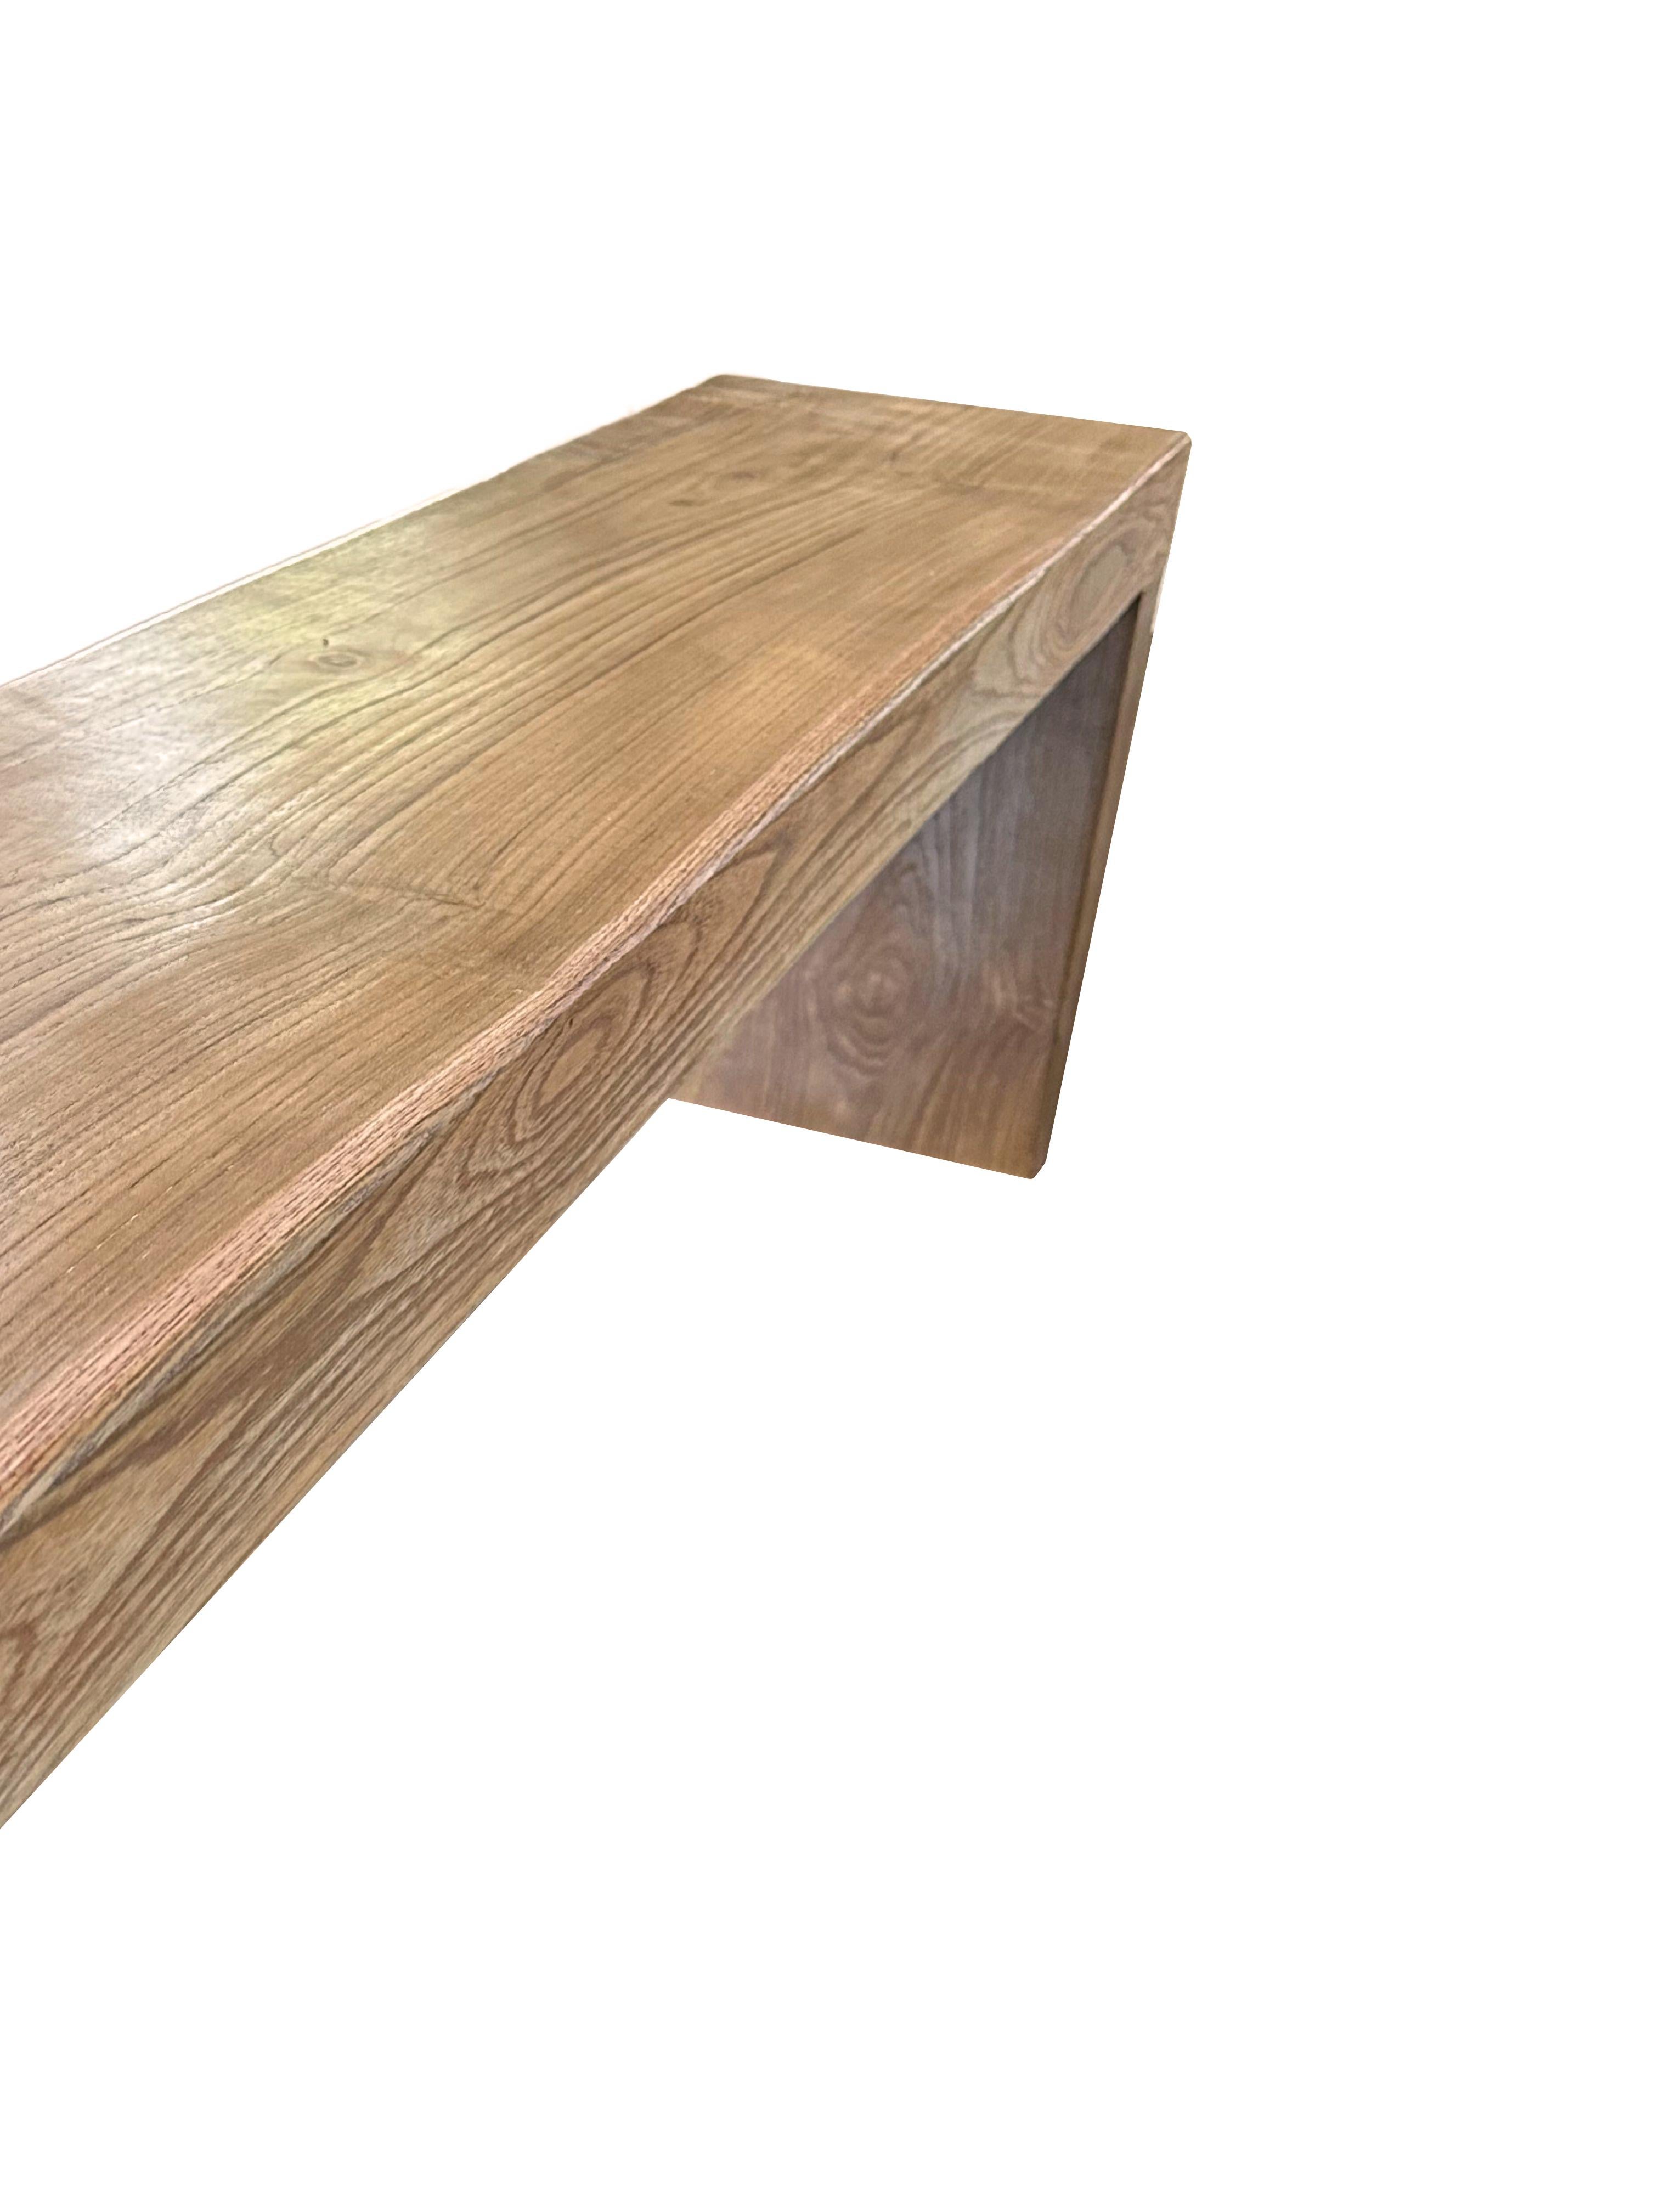 Sculptural Teak Wood Bench Modern Organic For Sale 1